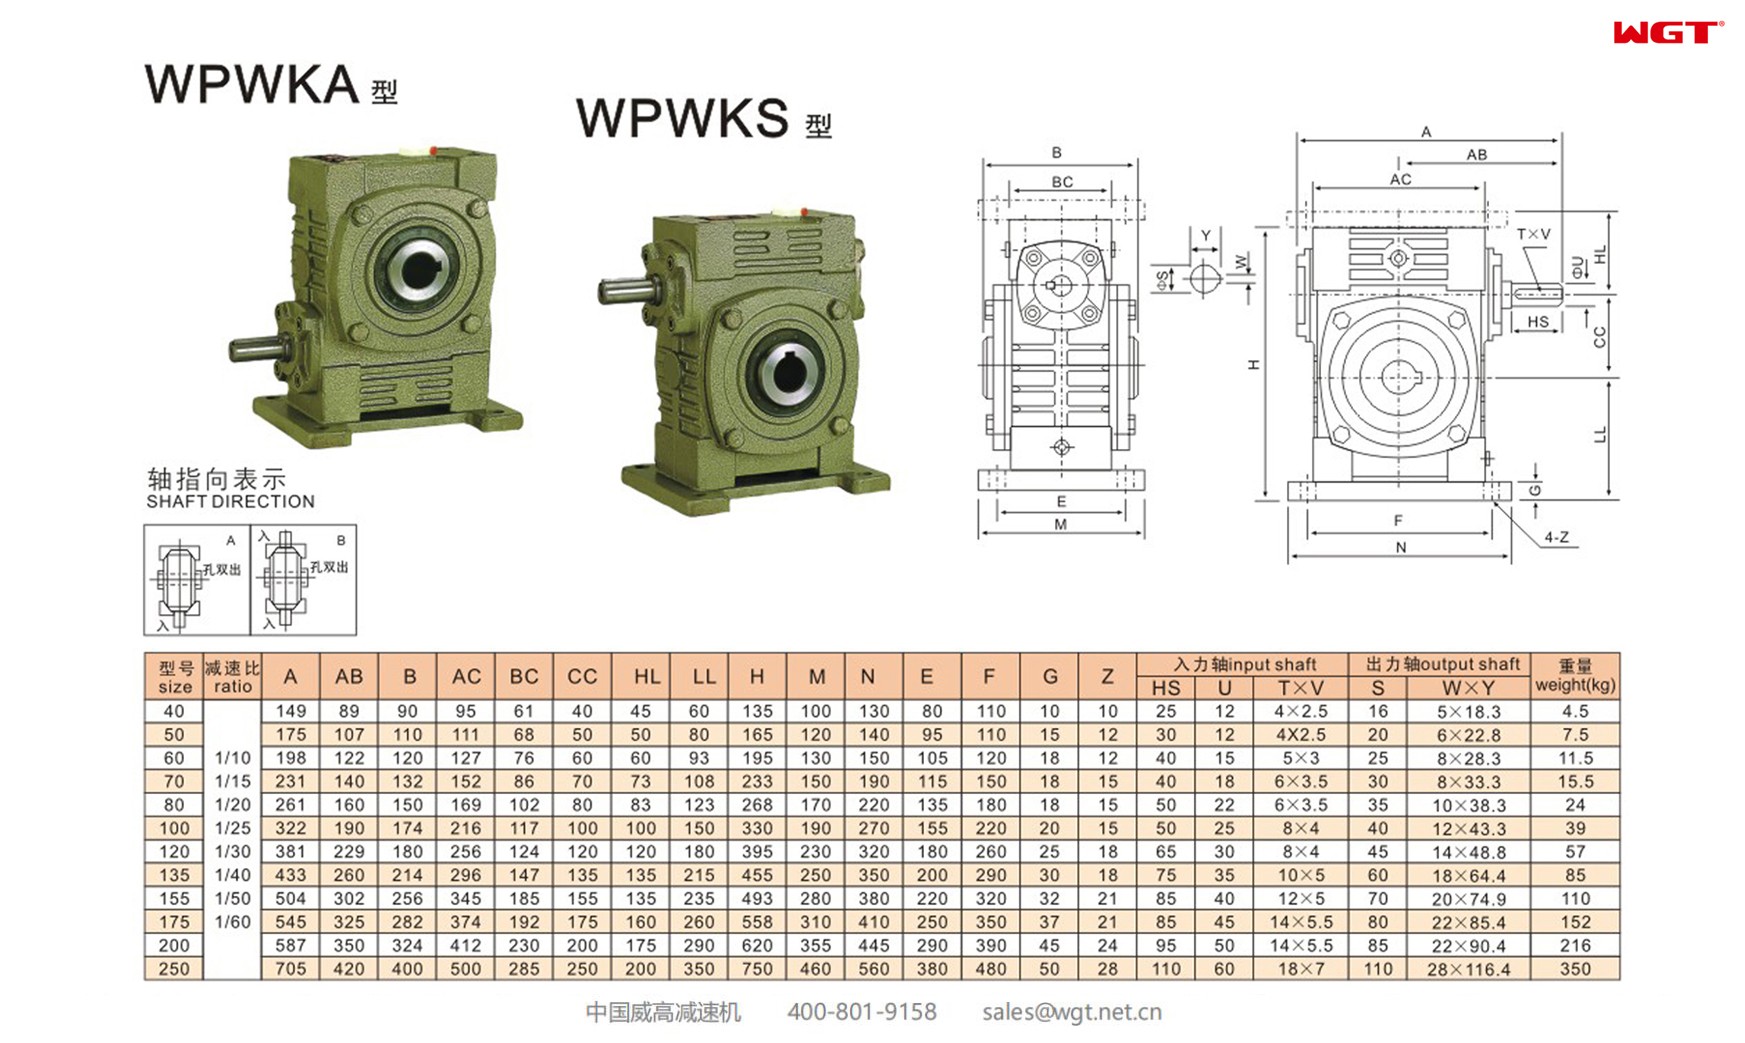 WPWKA60 worm gear reducer universal speed reducer